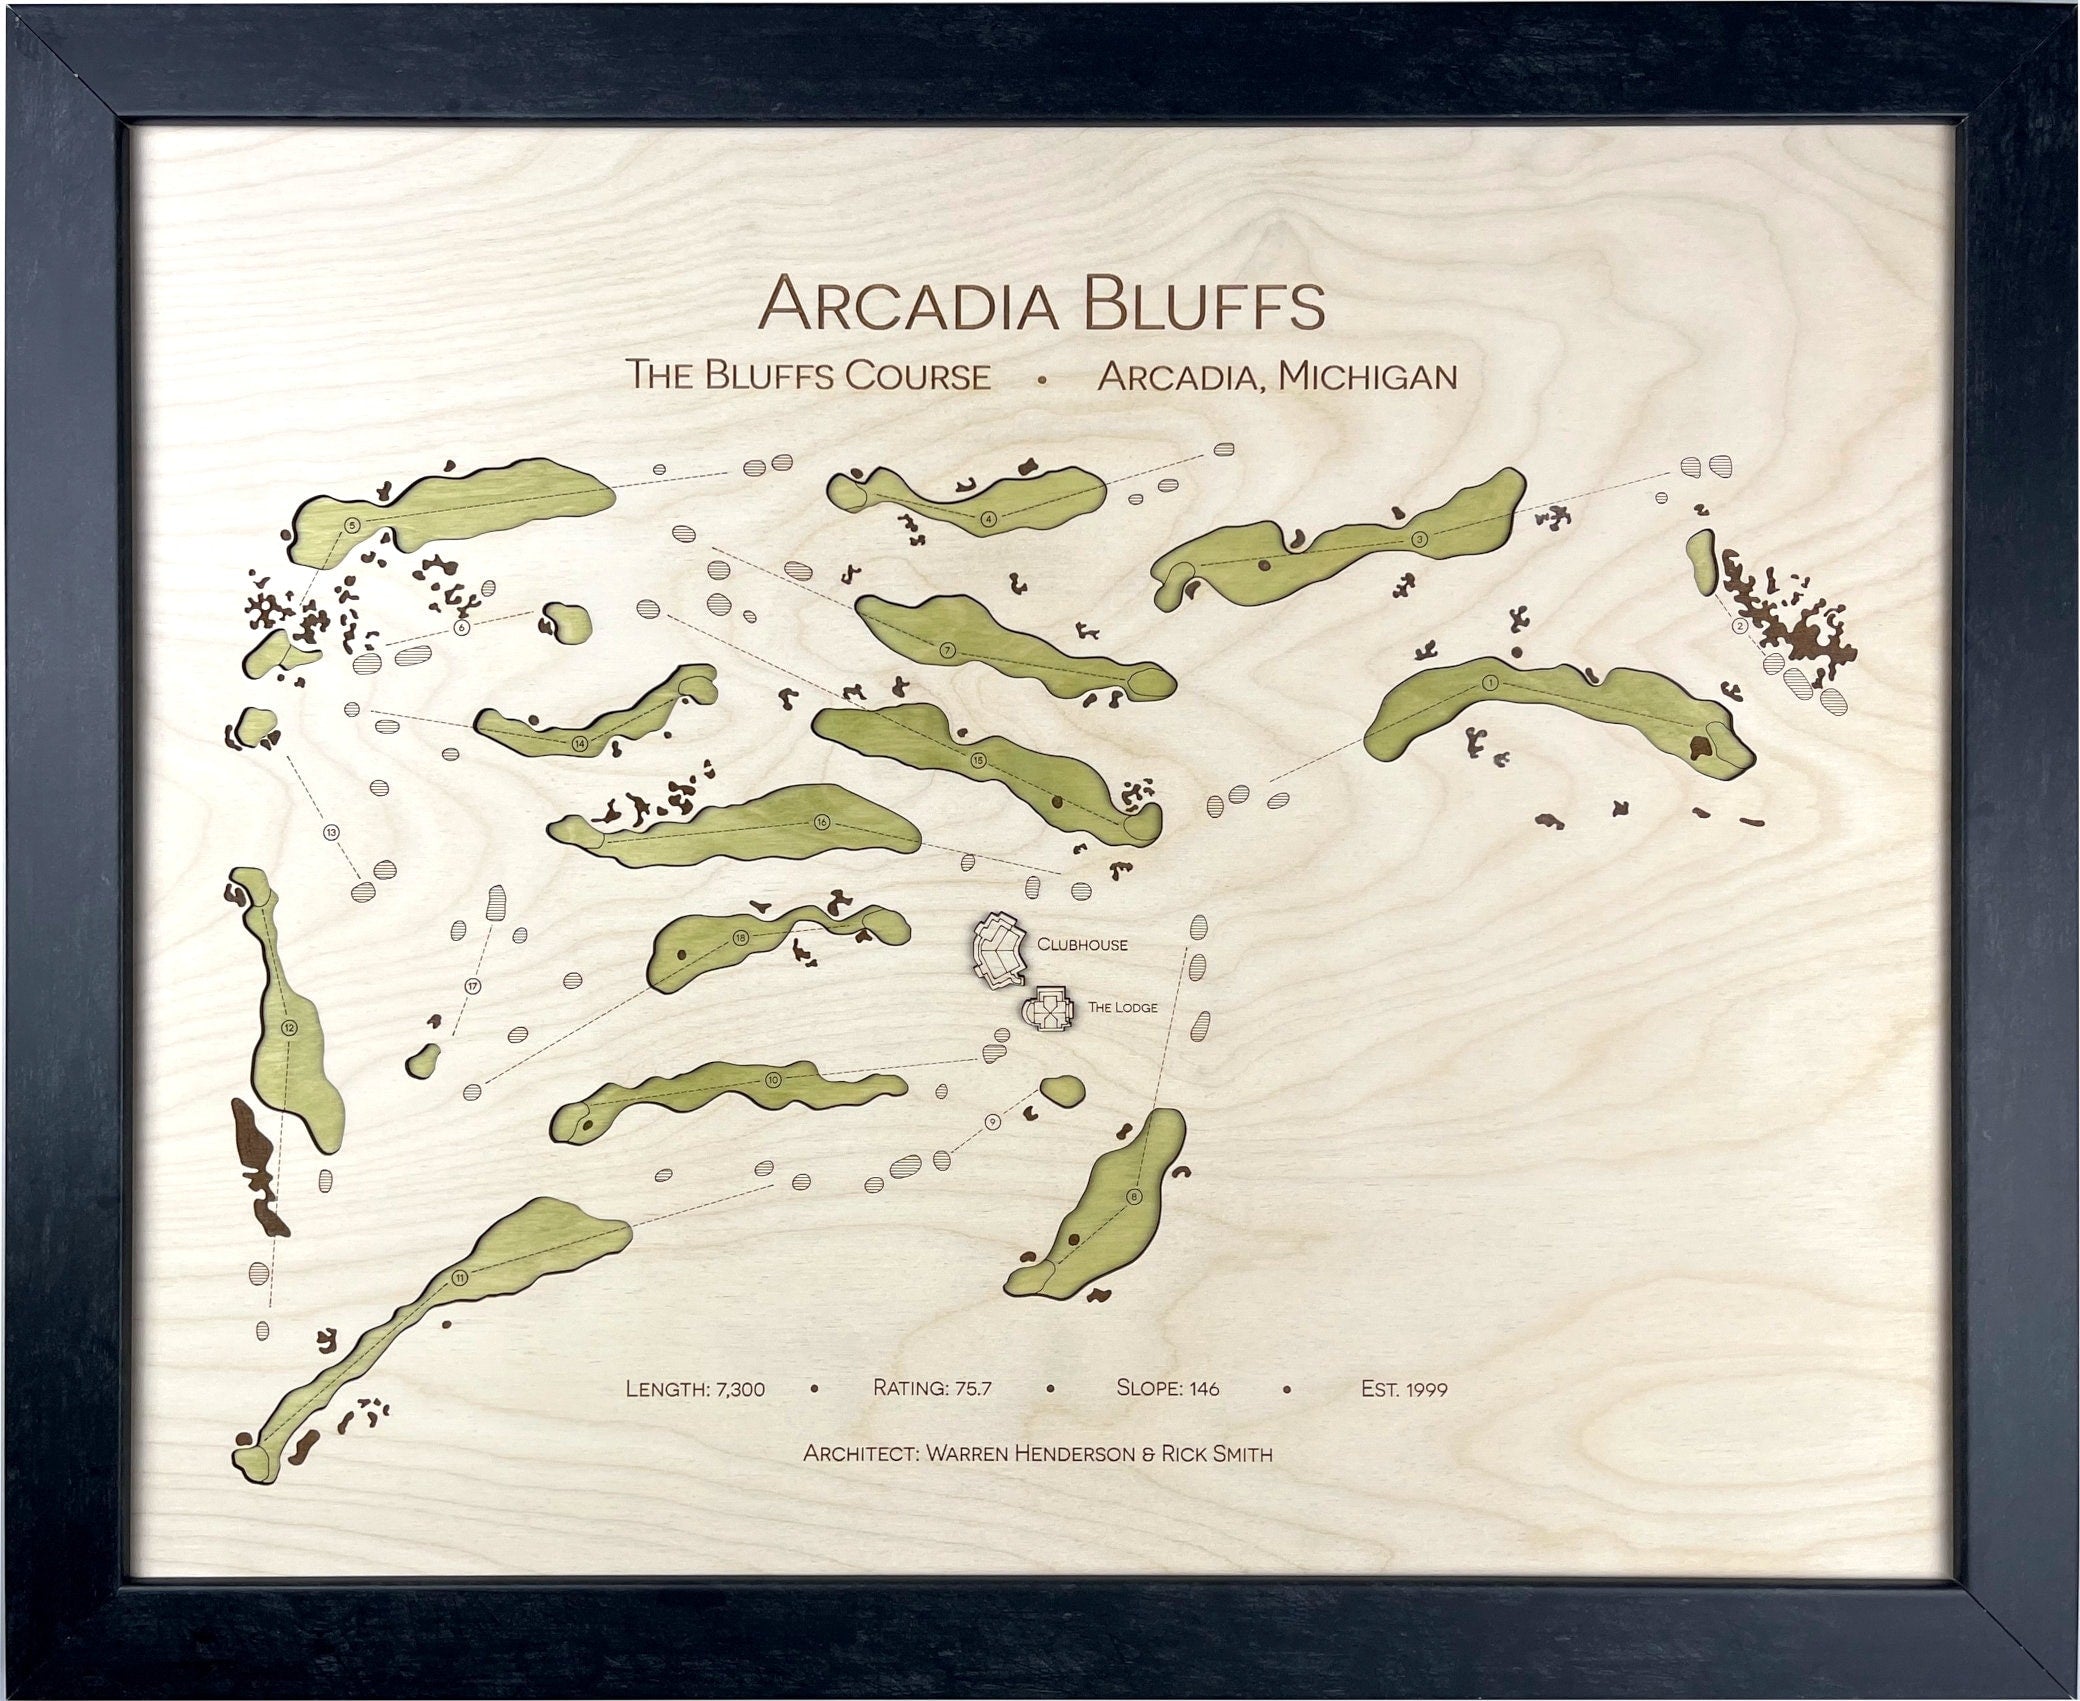 Arcadia Bluffs - The Bluffs Course